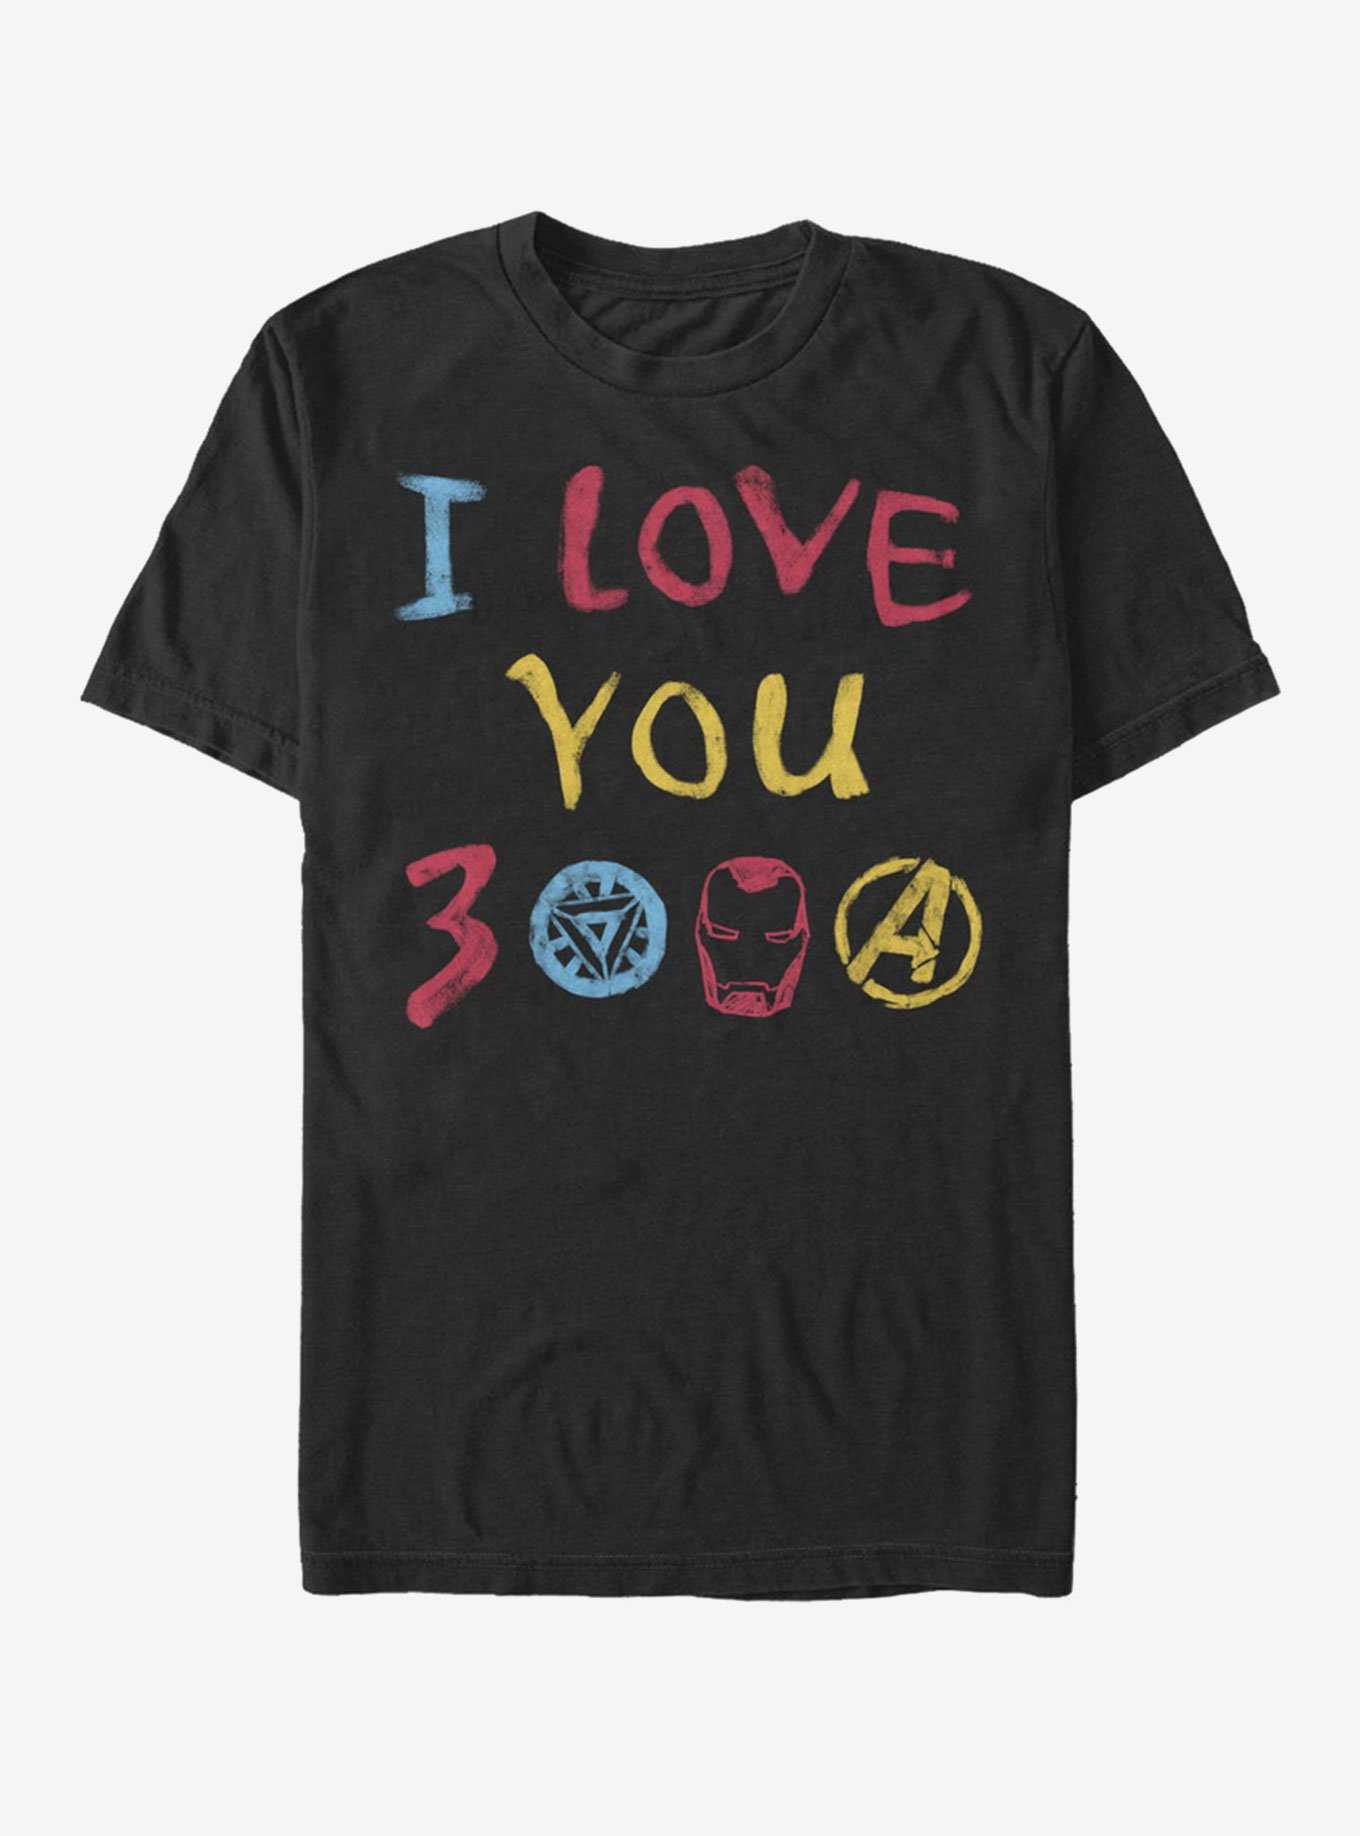 Marvel Avengers: Endgame Love 3000 Symbols T-Shirt, , hi-res